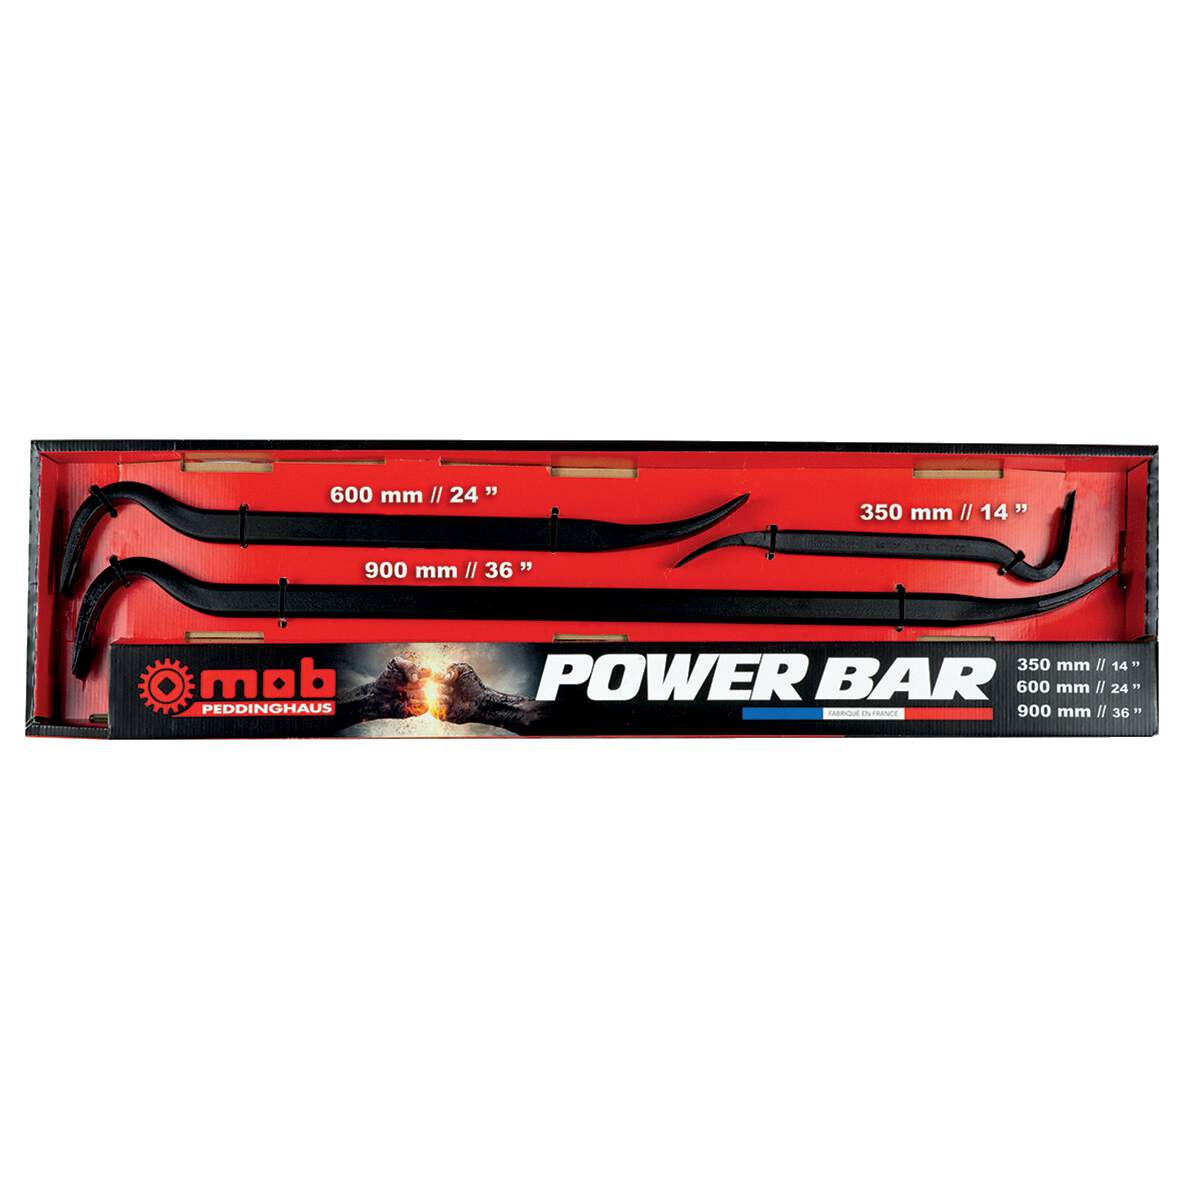 1263521 - Nageleisen Power Bar Satz 350,600,900mm